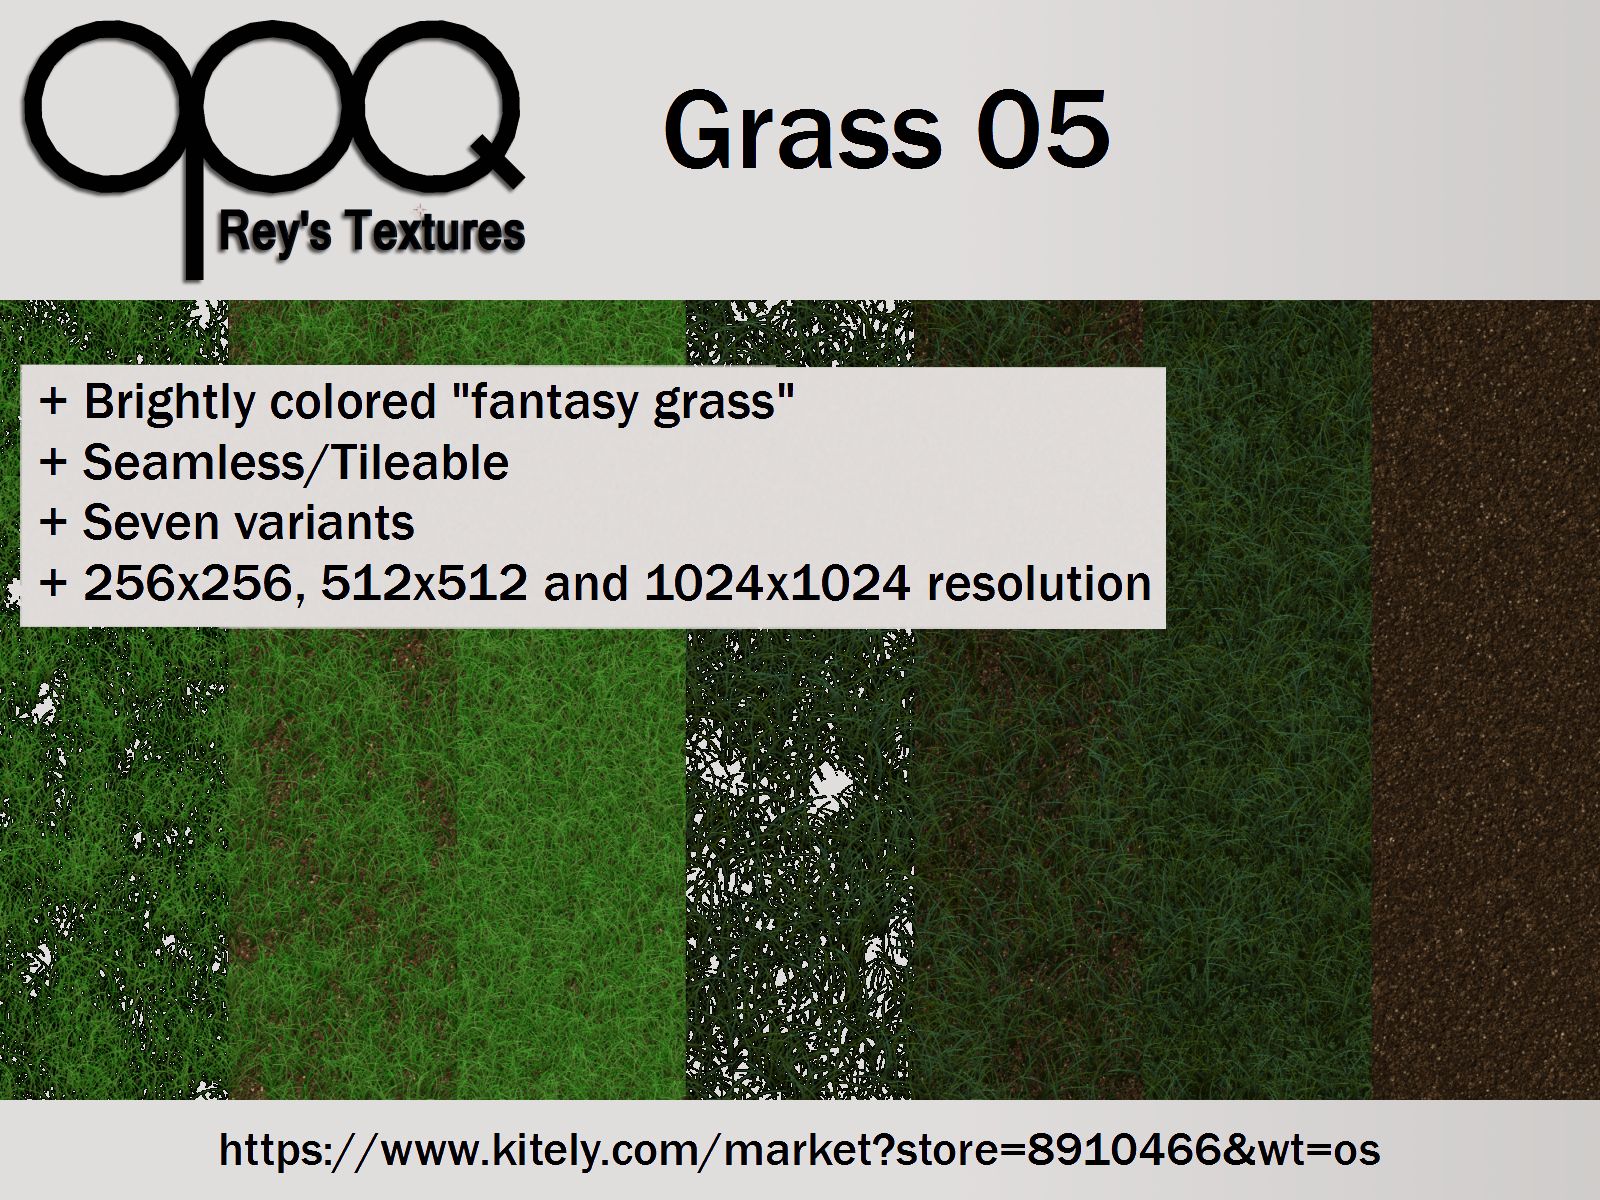 Rey's Grass 05 Poster Kitely.jpg